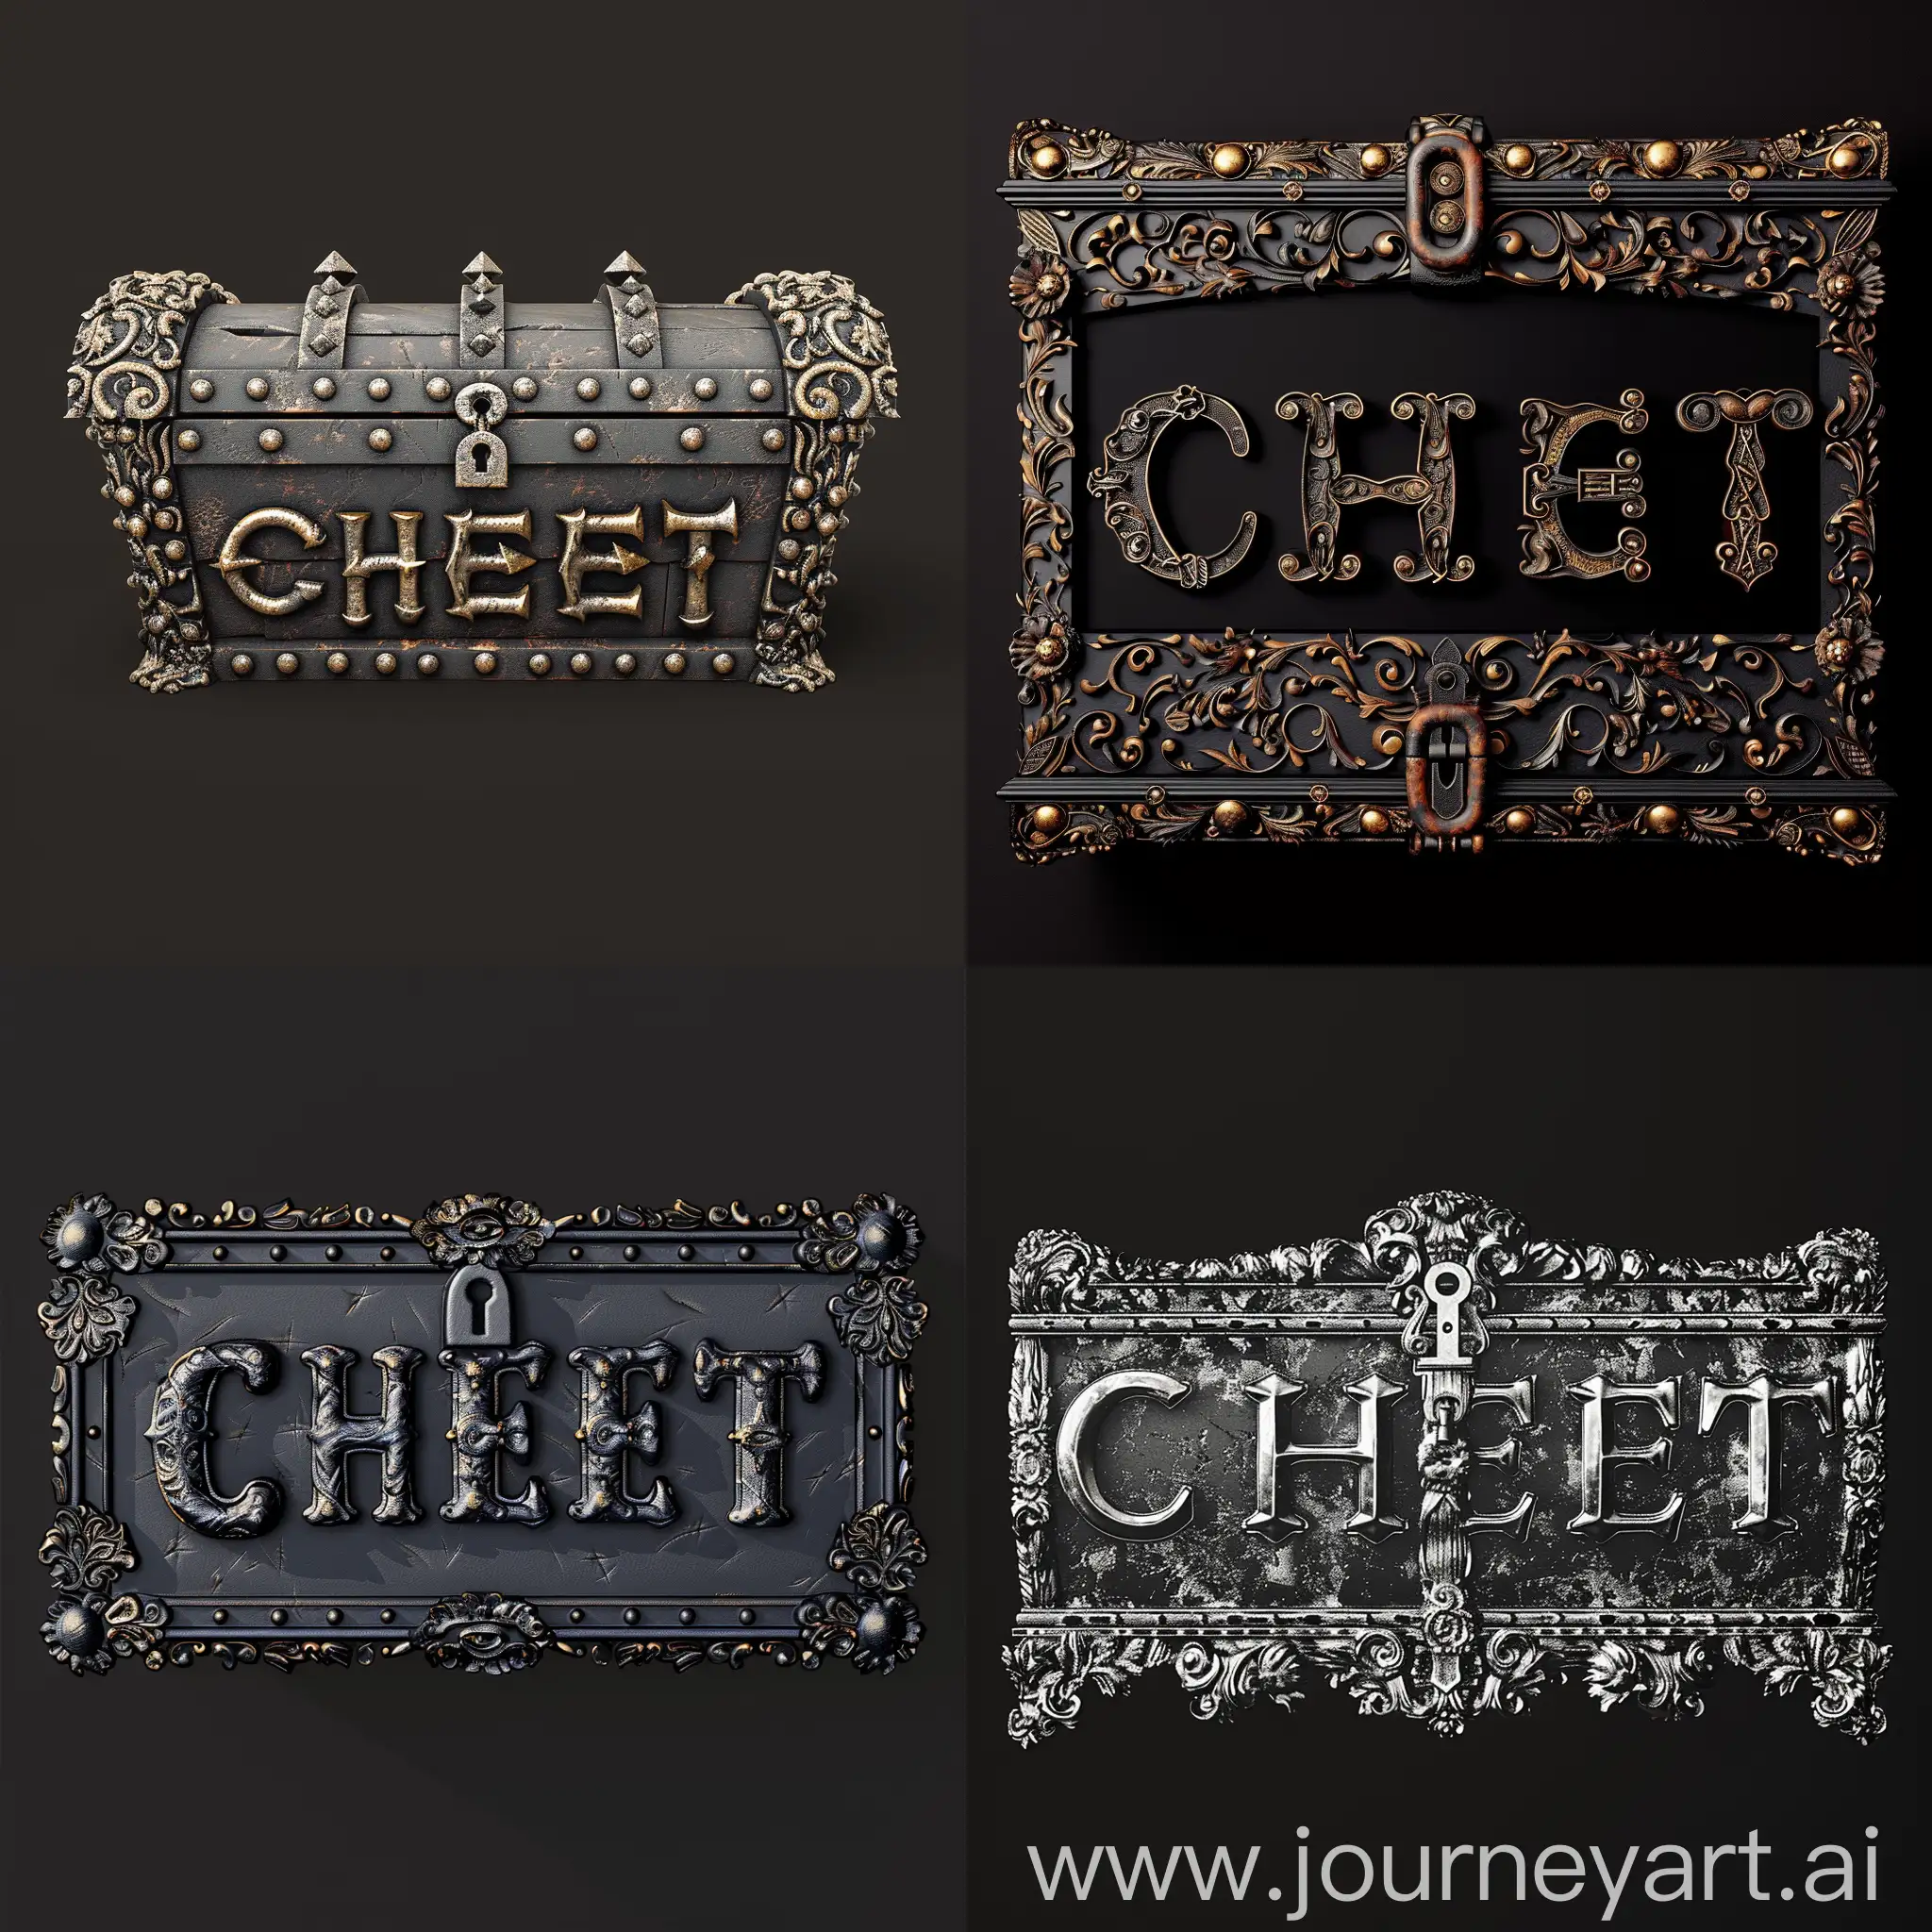 Creative-Logo-Design-Featuring-CHEST-as-a-Treasure-Chest